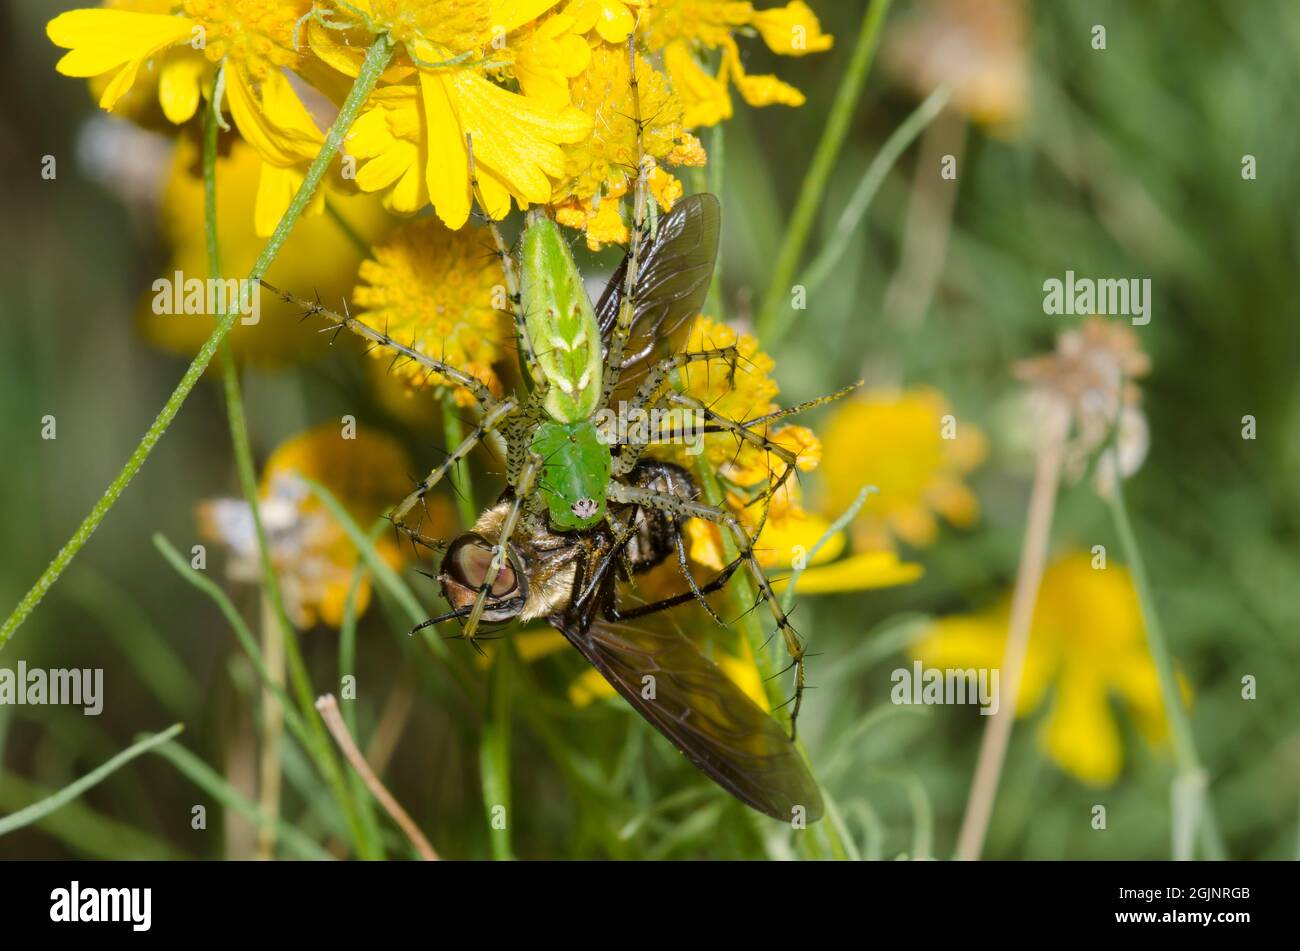 Green Lynx Spider, Peucetia viridans, feeding on captured Bee Fly, Family Bombyliidae, on Yellow Sneezeweed, Helenium amarum Stock Photo